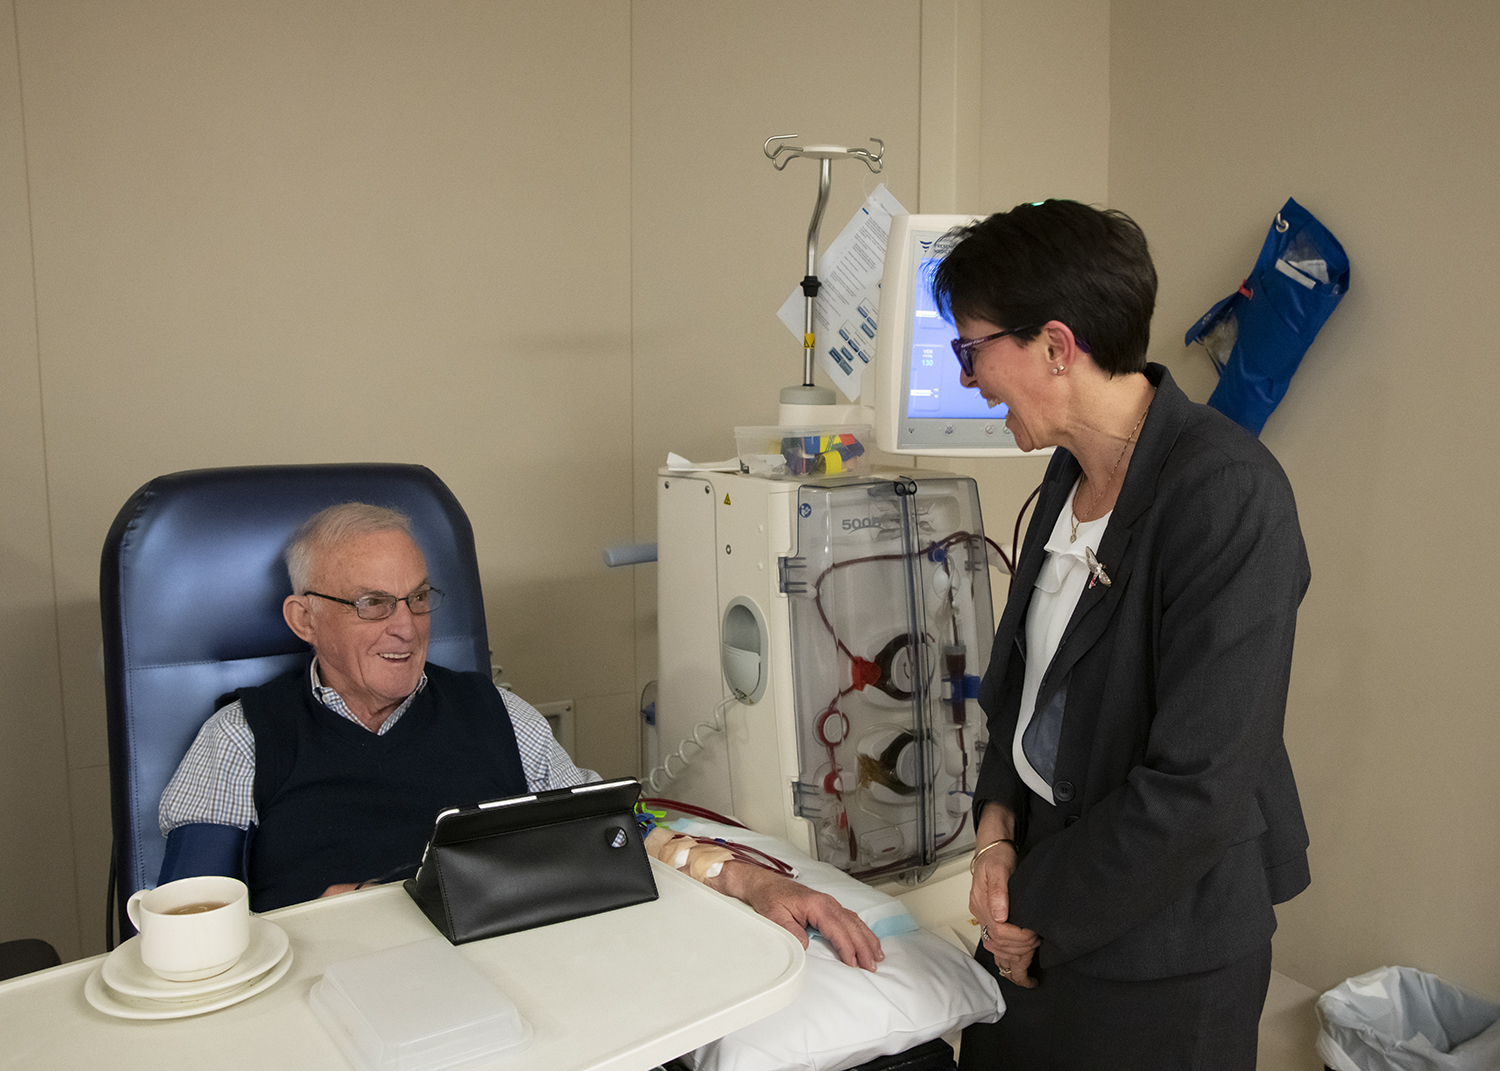 Professor Karen Dwyer with a patient in a ward.